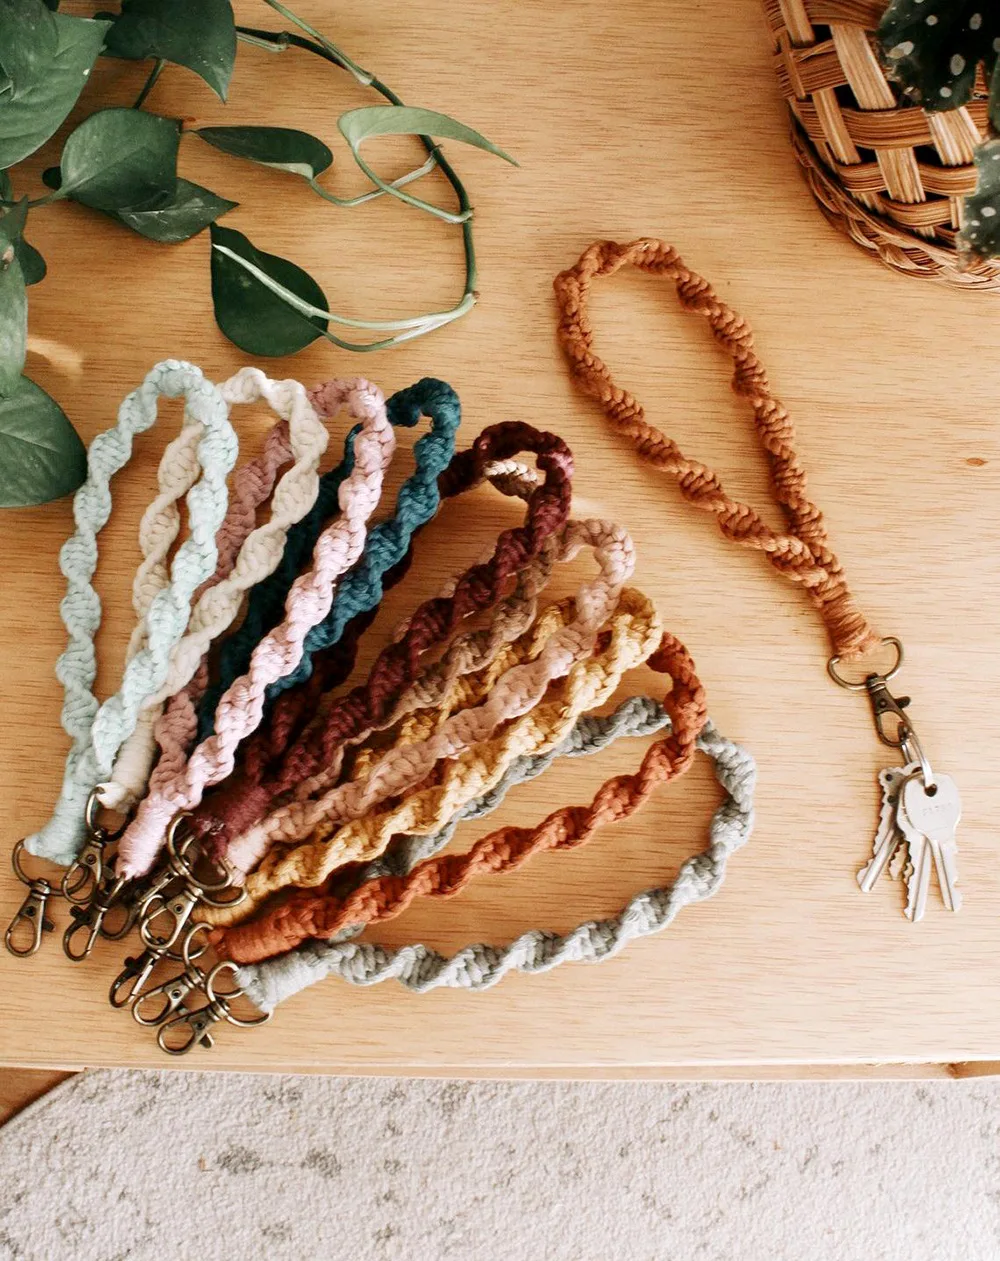 Handmade Braided Wristlet for Keys and Wallets, Cotton Keychain/Lanyar –  handmadebyuruba